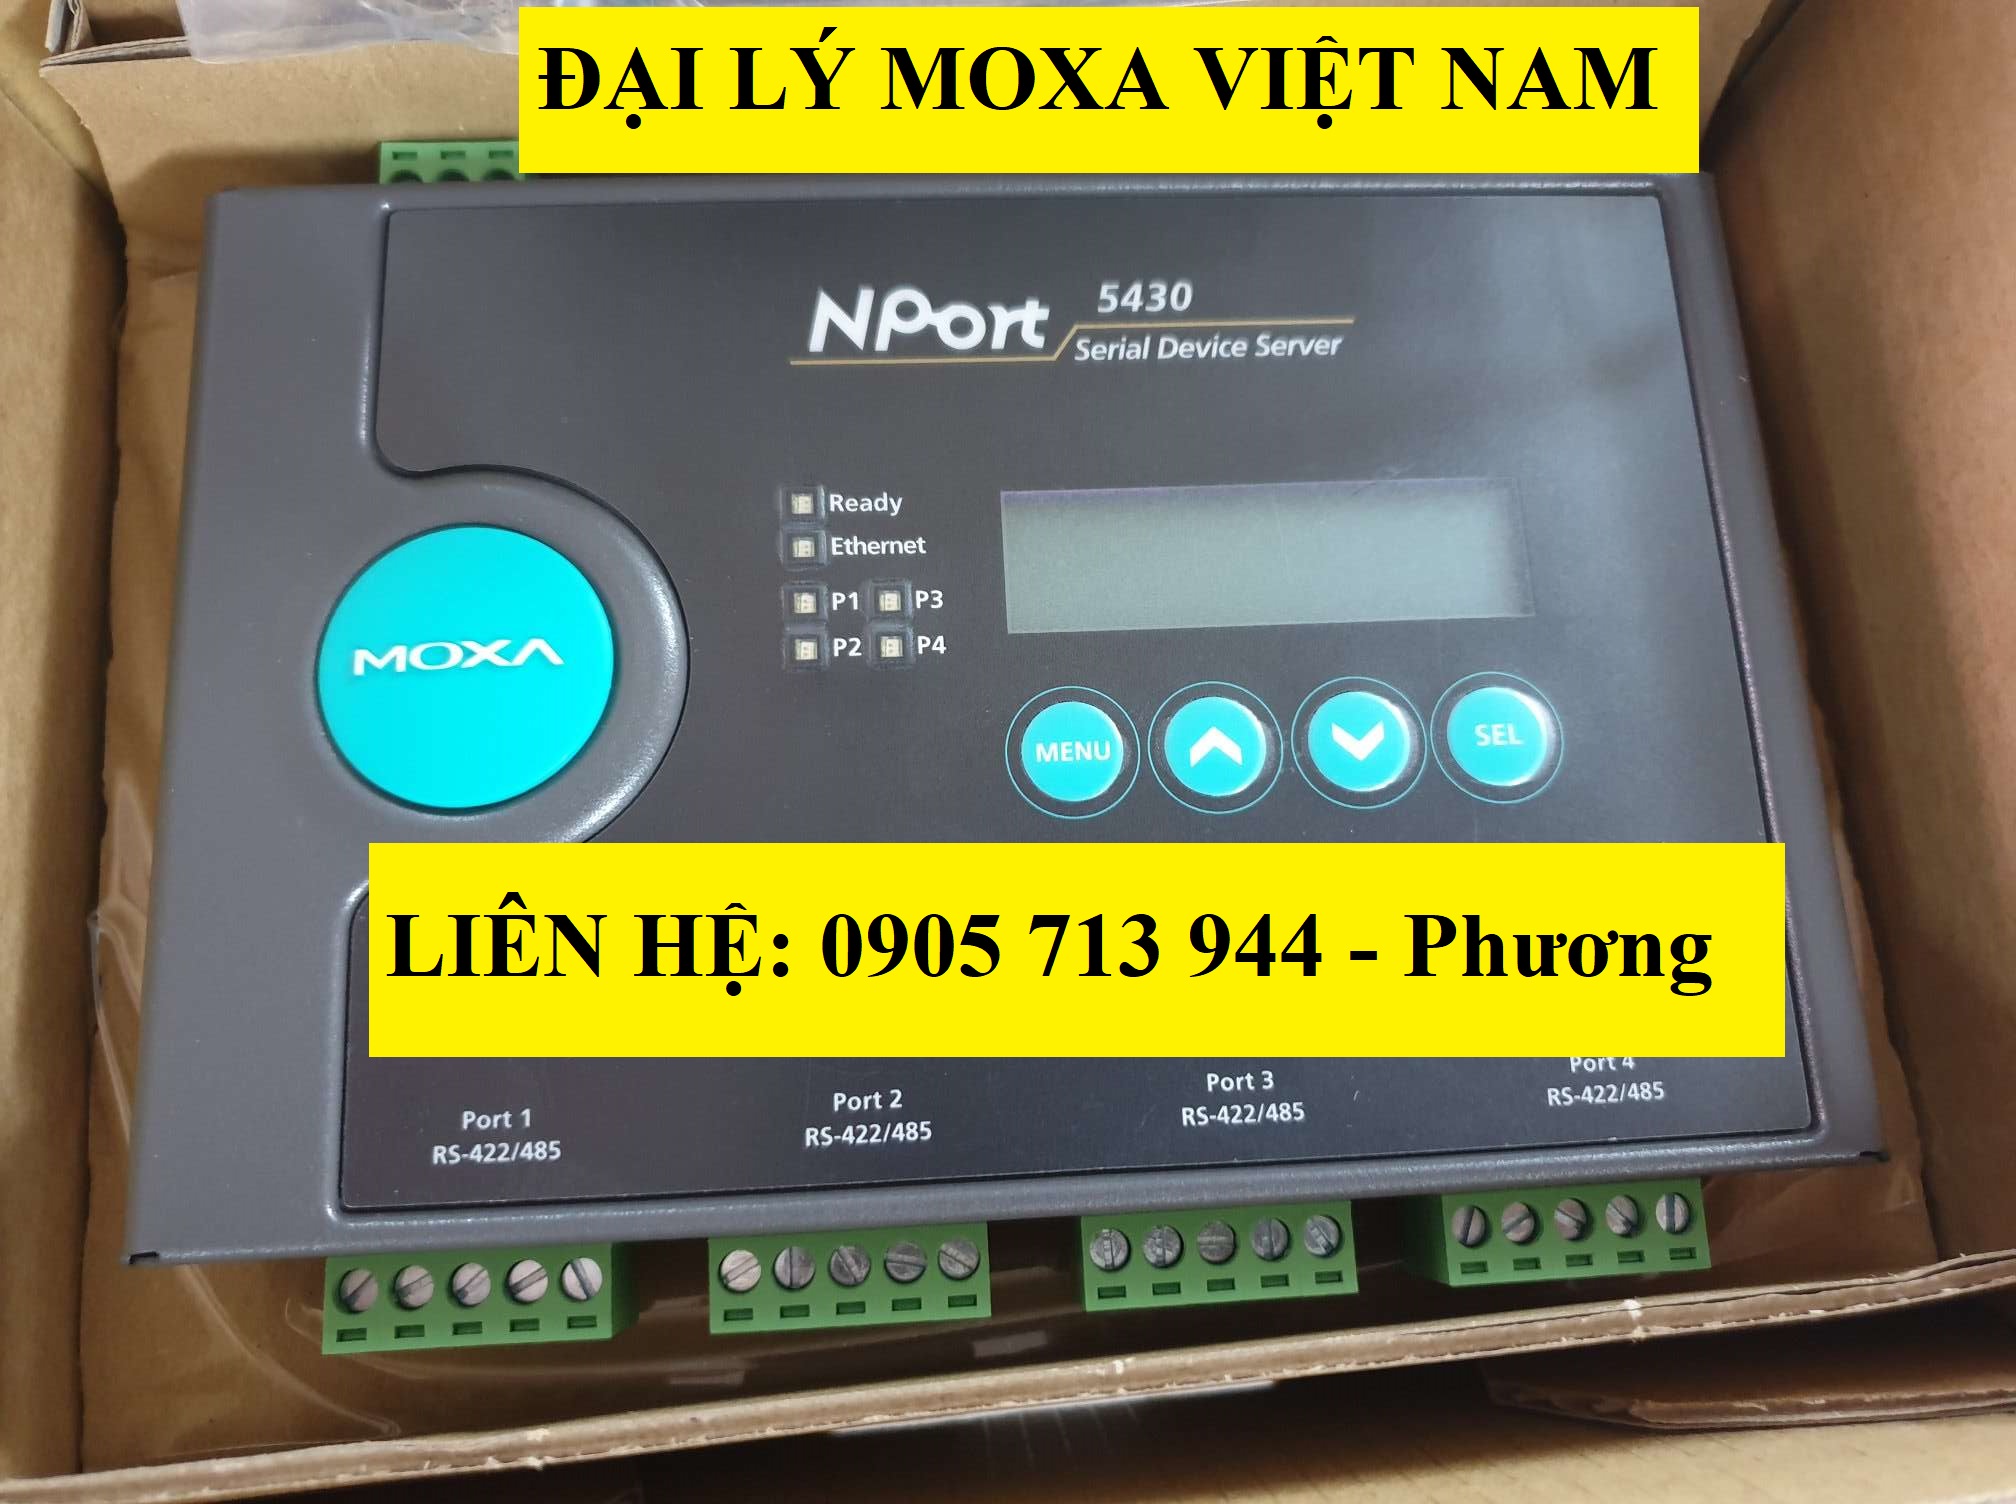 nport-5430-bo-chuyen-doi-4-cong-rs232-485-422-sang-ethernet-moxa-viet-nam-moxa-vietnam.png